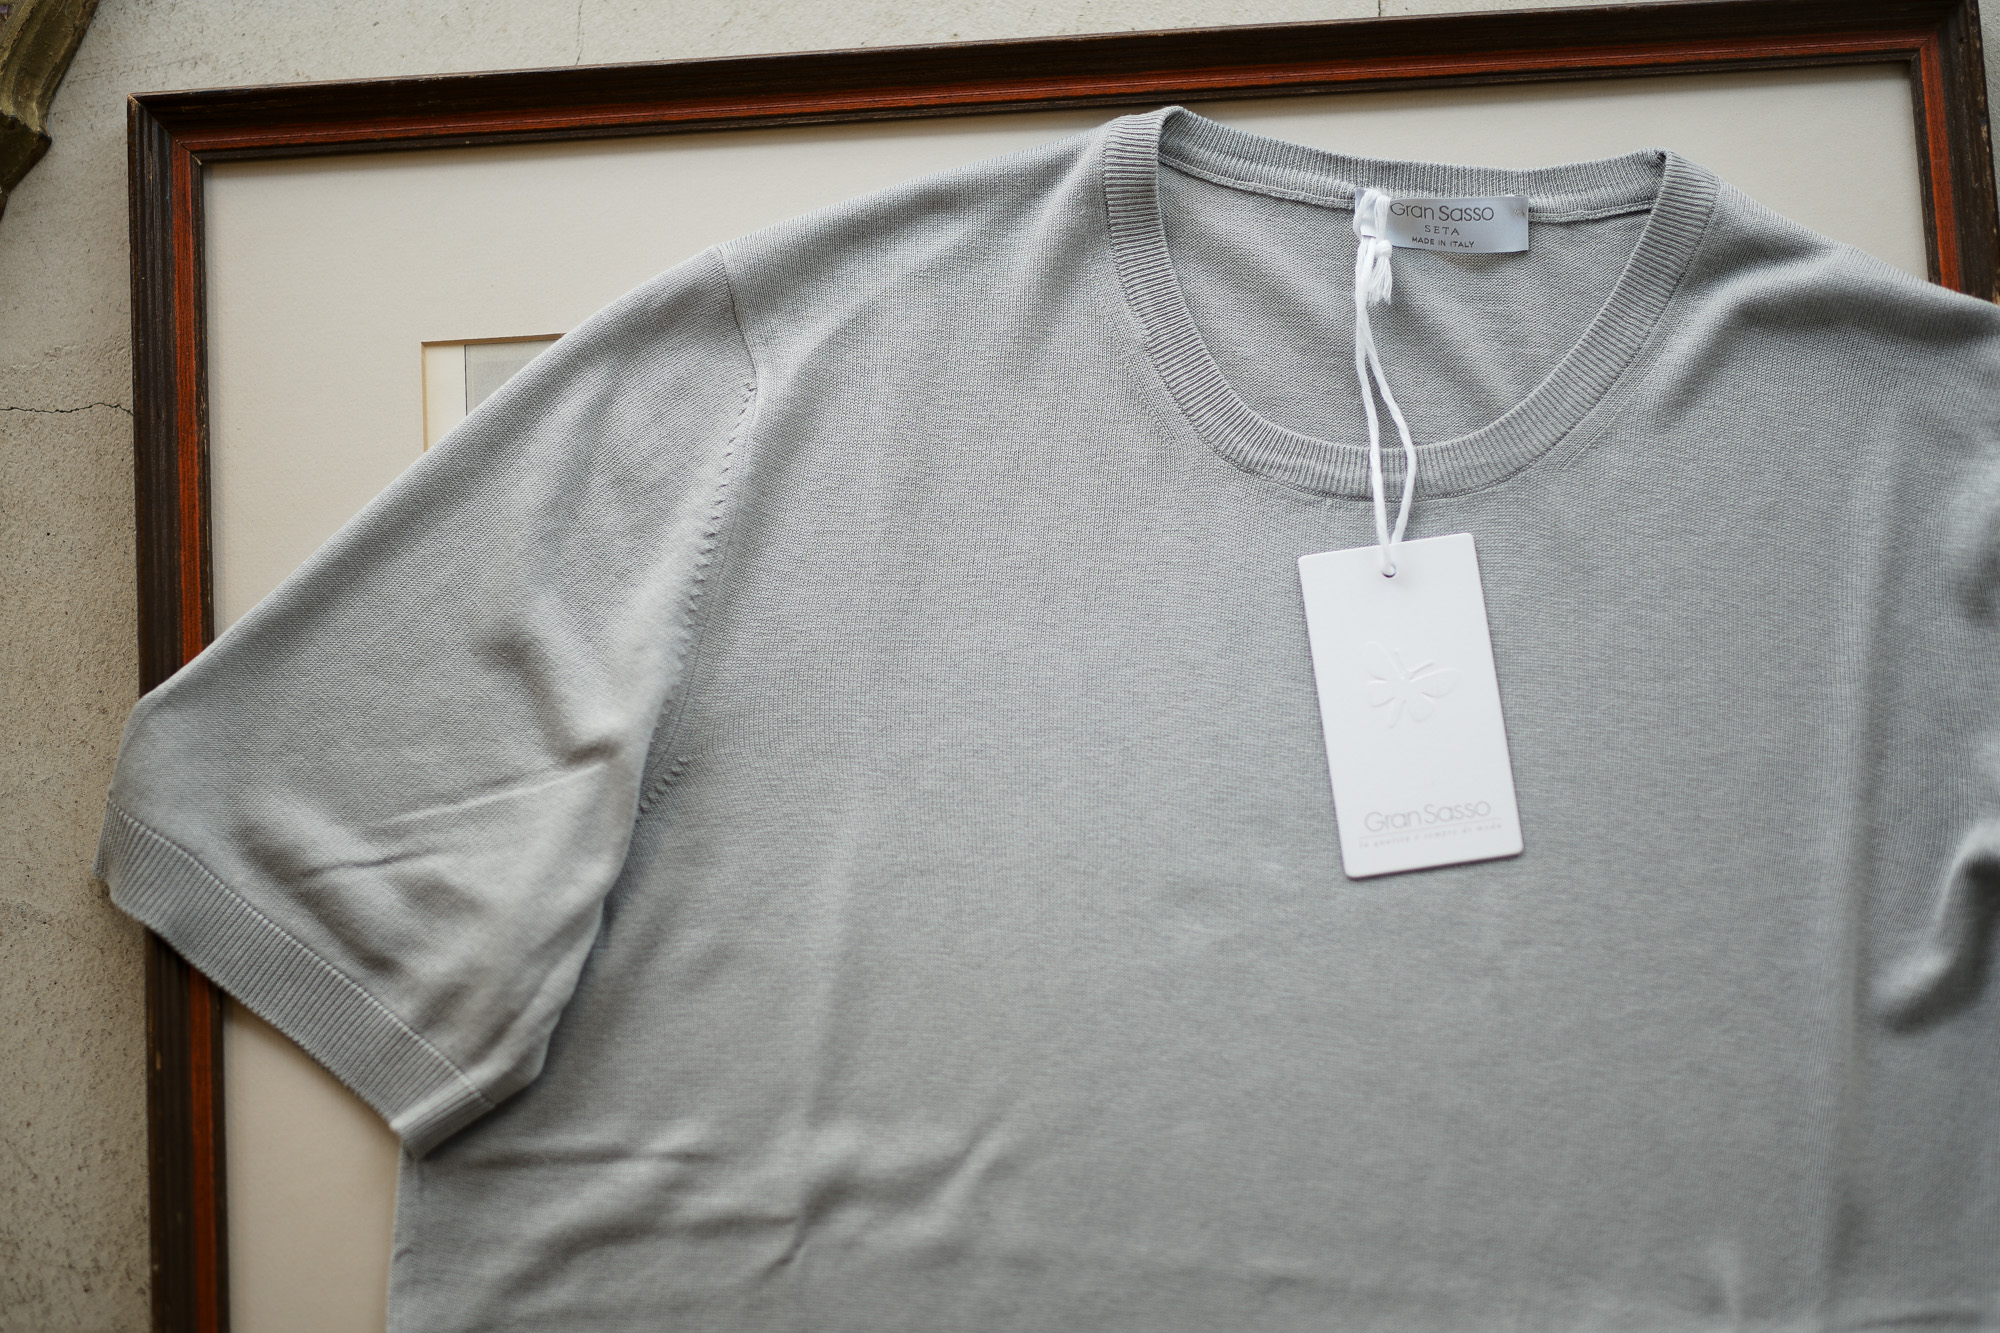 Gran Sasso (グランサッソ) Silk Knit T-shirt (シルクニット Tシャツ) SETA (シルク 100%) ショートスリーブ シルク ニット Tシャツ GREY (グレー・056) made in italy (イタリア製) 2019 春夏新作 gransasso 愛知 名古屋 altoediritto アルトエデリット